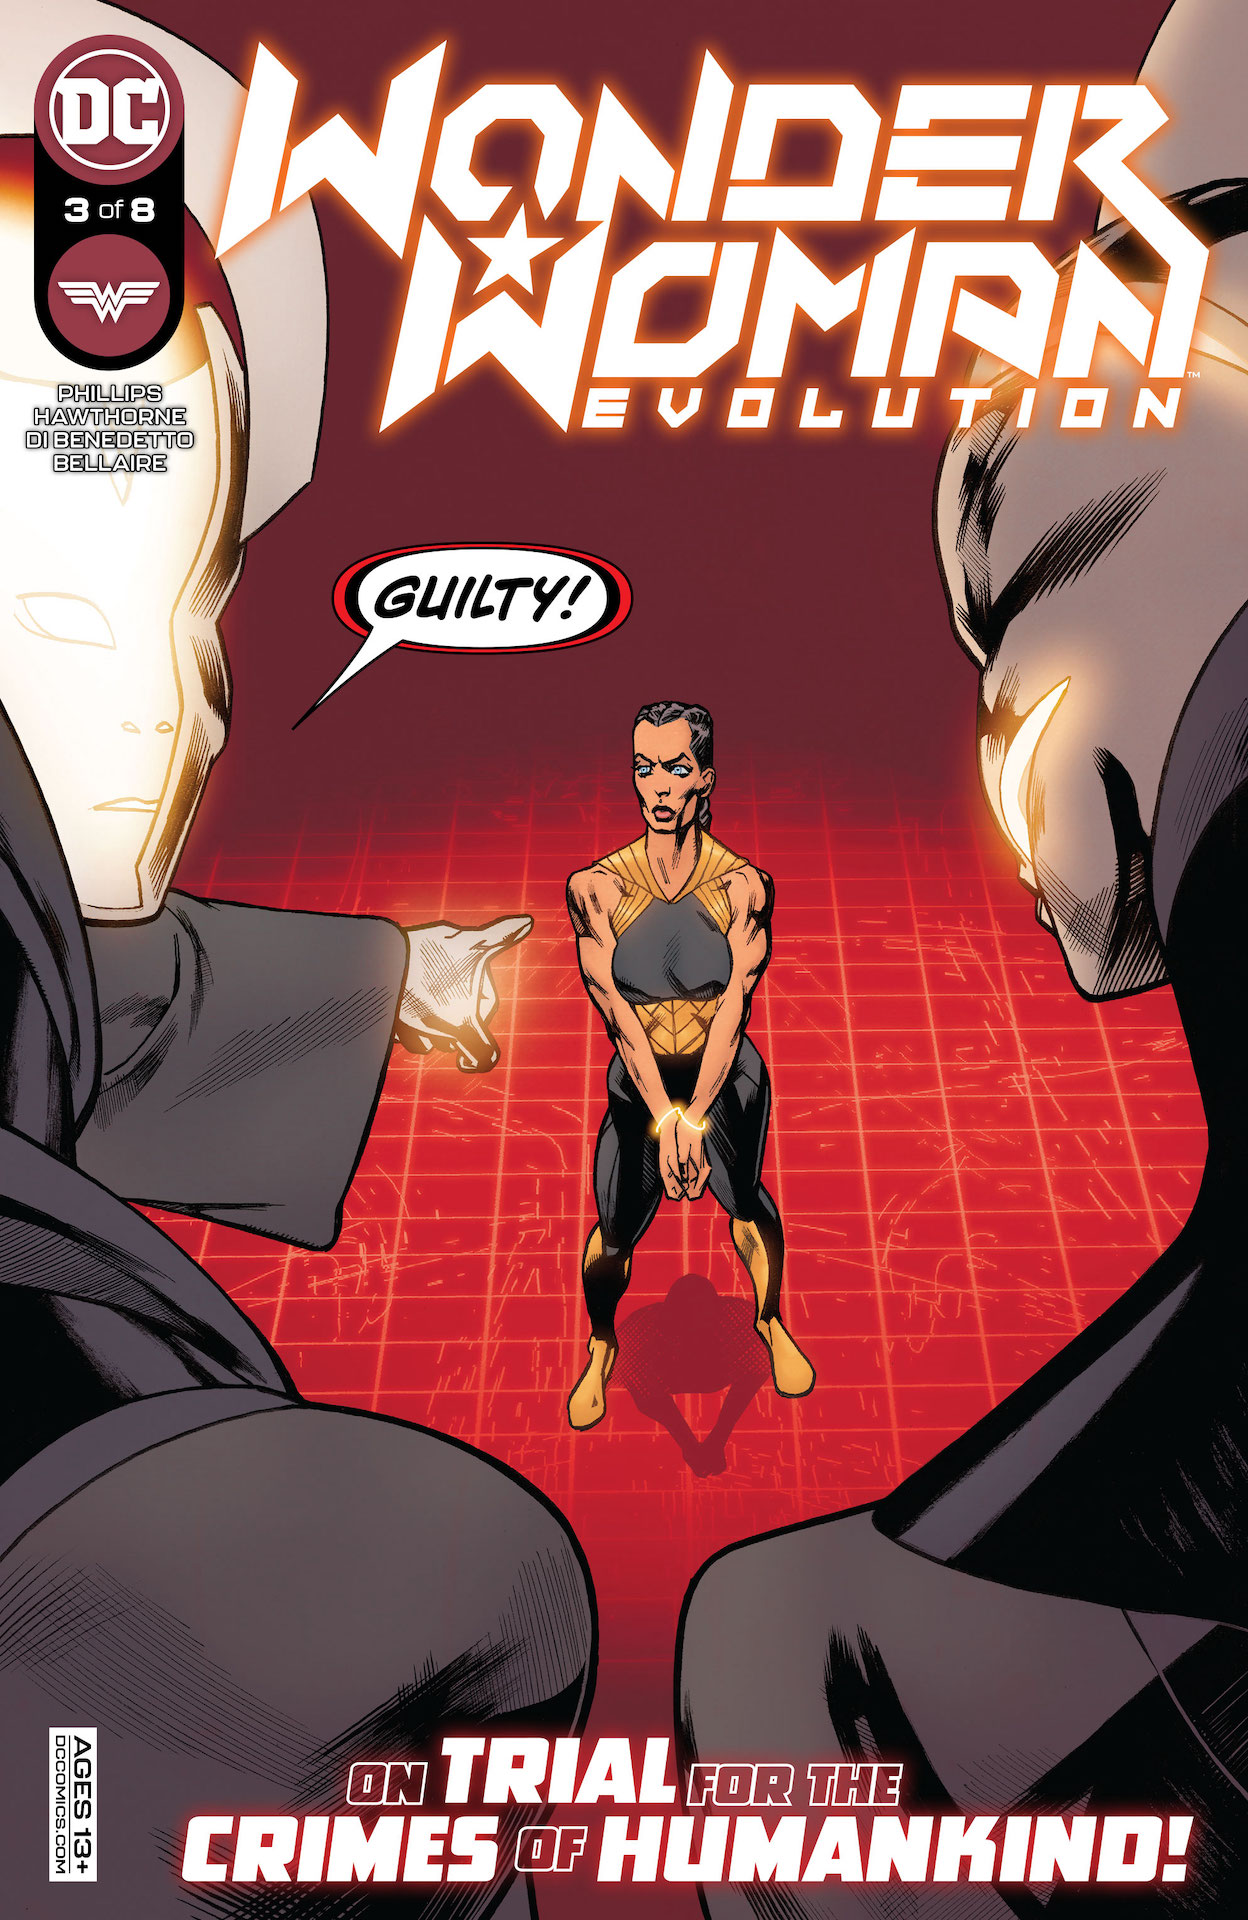 DC Preview: Wonder Woman: Evolution #3